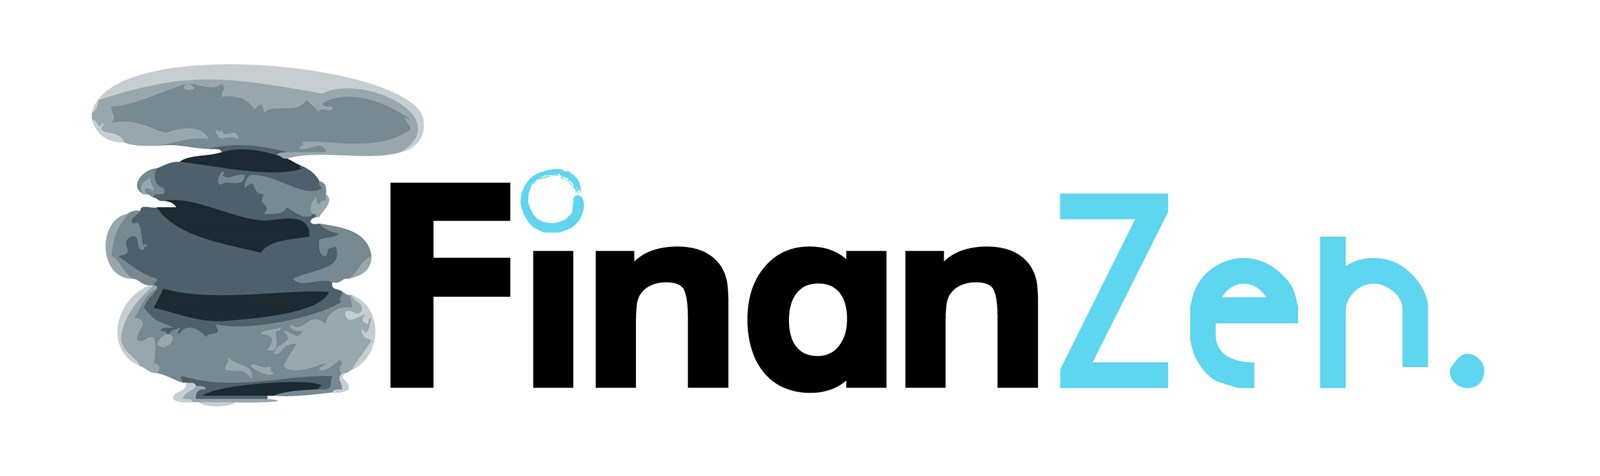 Logo van Finanzen